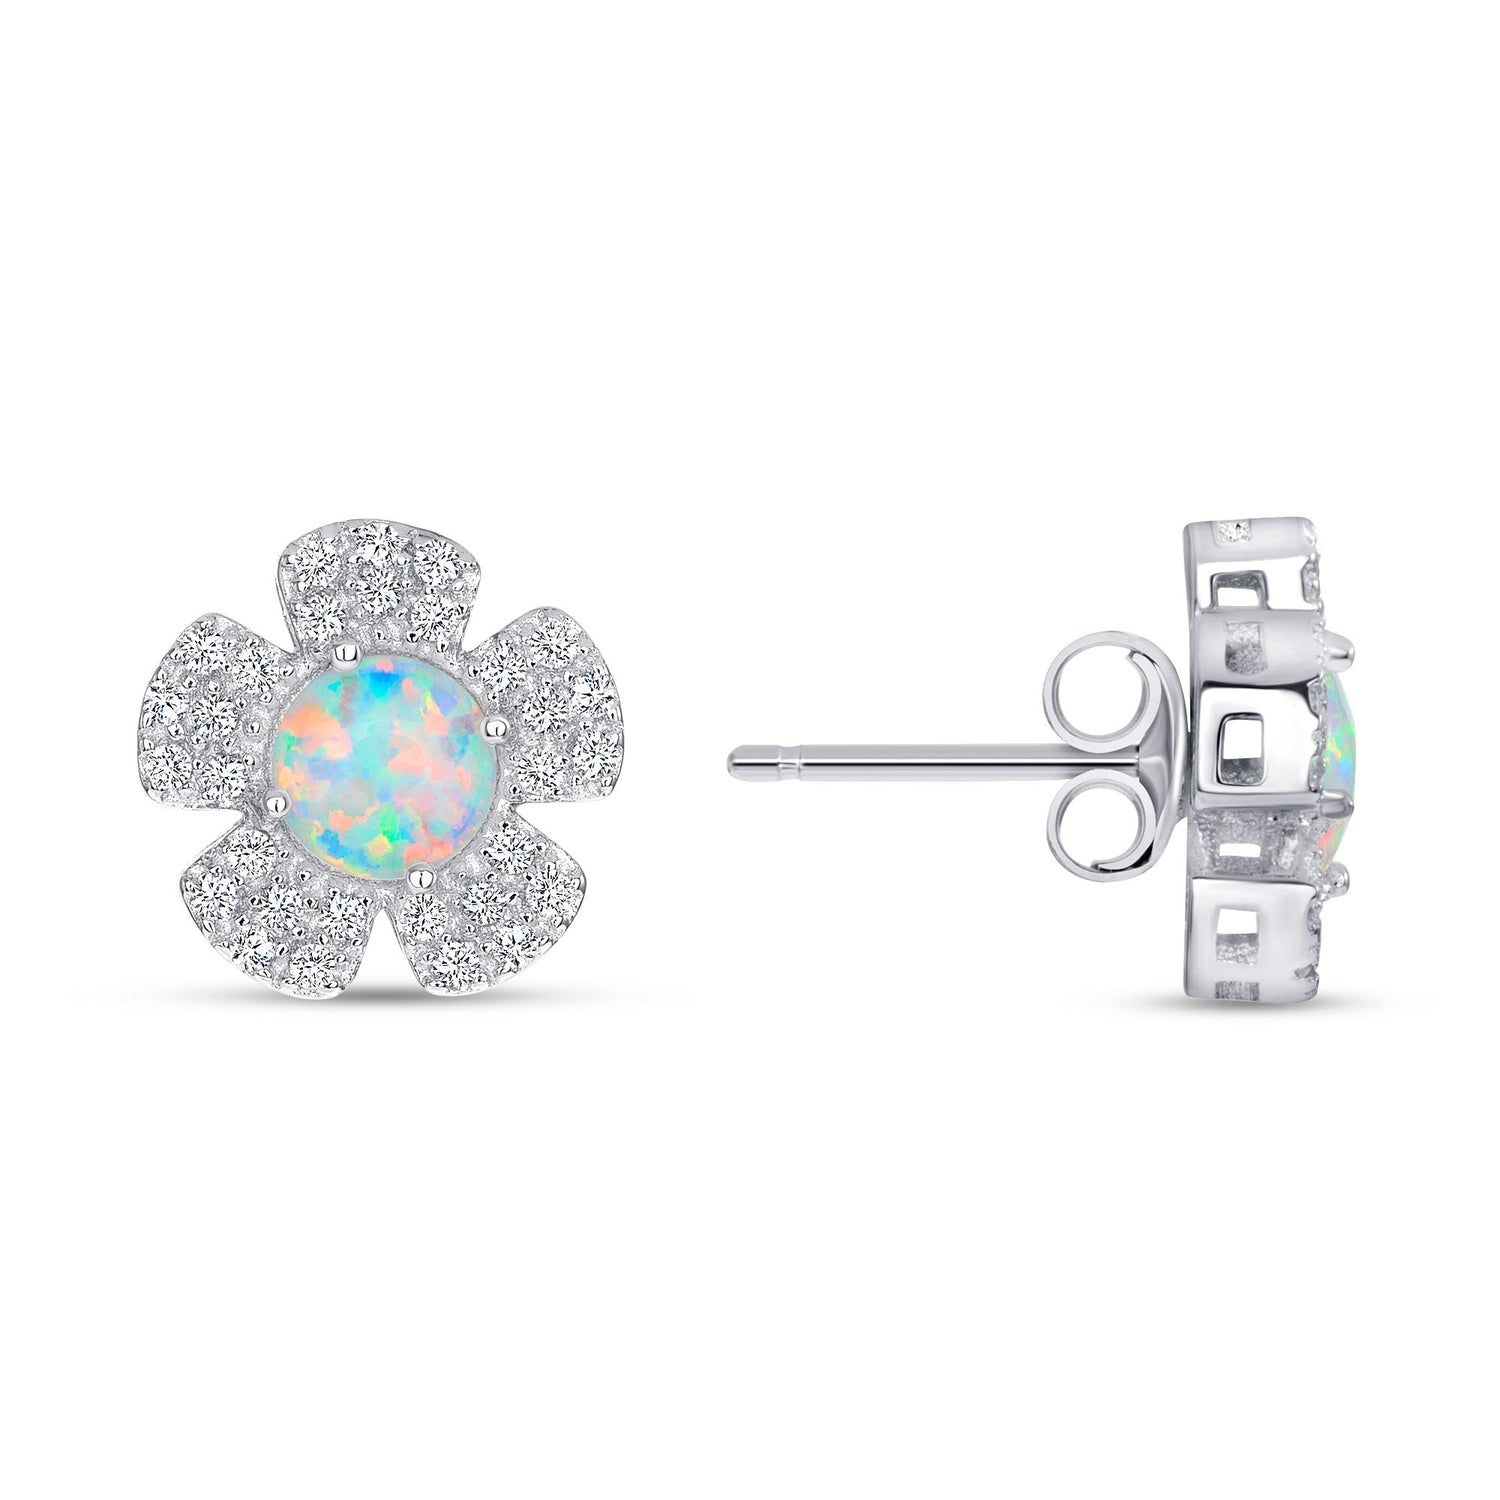 925 Sterling Silver Round Cut Opal &amp; Pavé CZ Flower Pendant &amp; Stud Earrings Jewelry Set